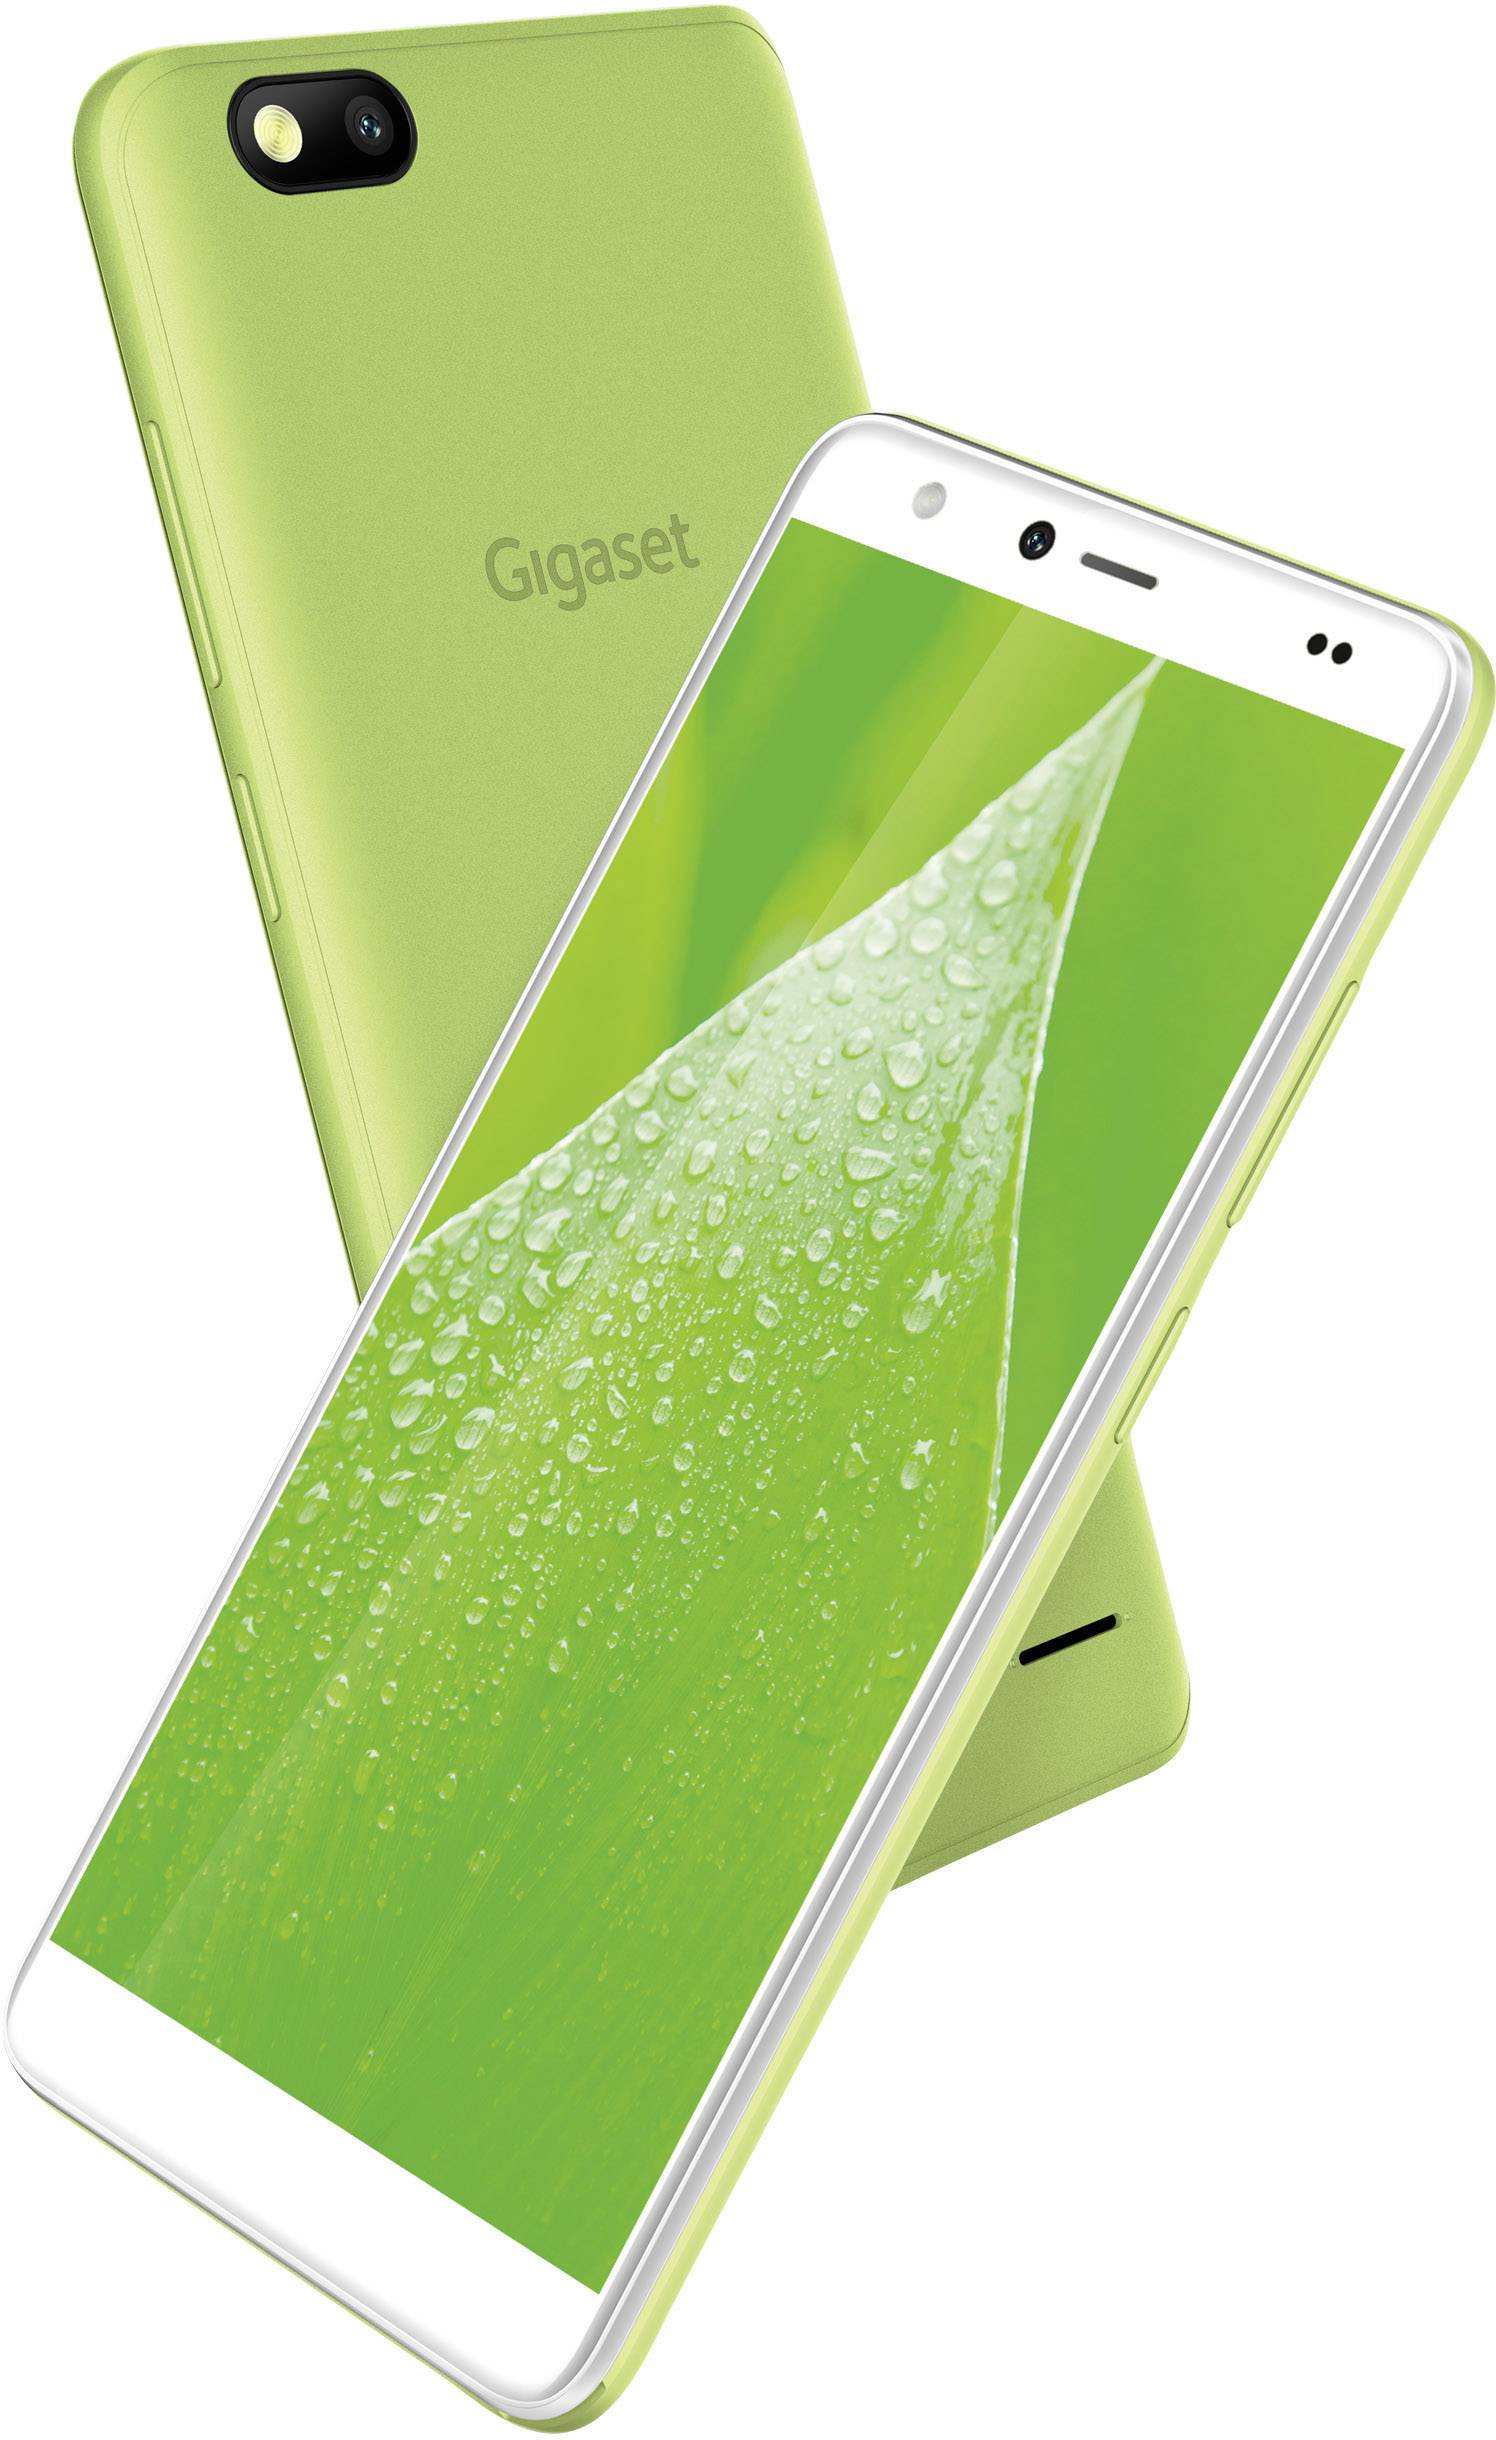 koel kalkoen fusie Gigaset GS100 Smartphone 8 GB 5.5 inch (14 cm) Dual SIM Android™ 8.1 Oreo  Green | Conrad.com